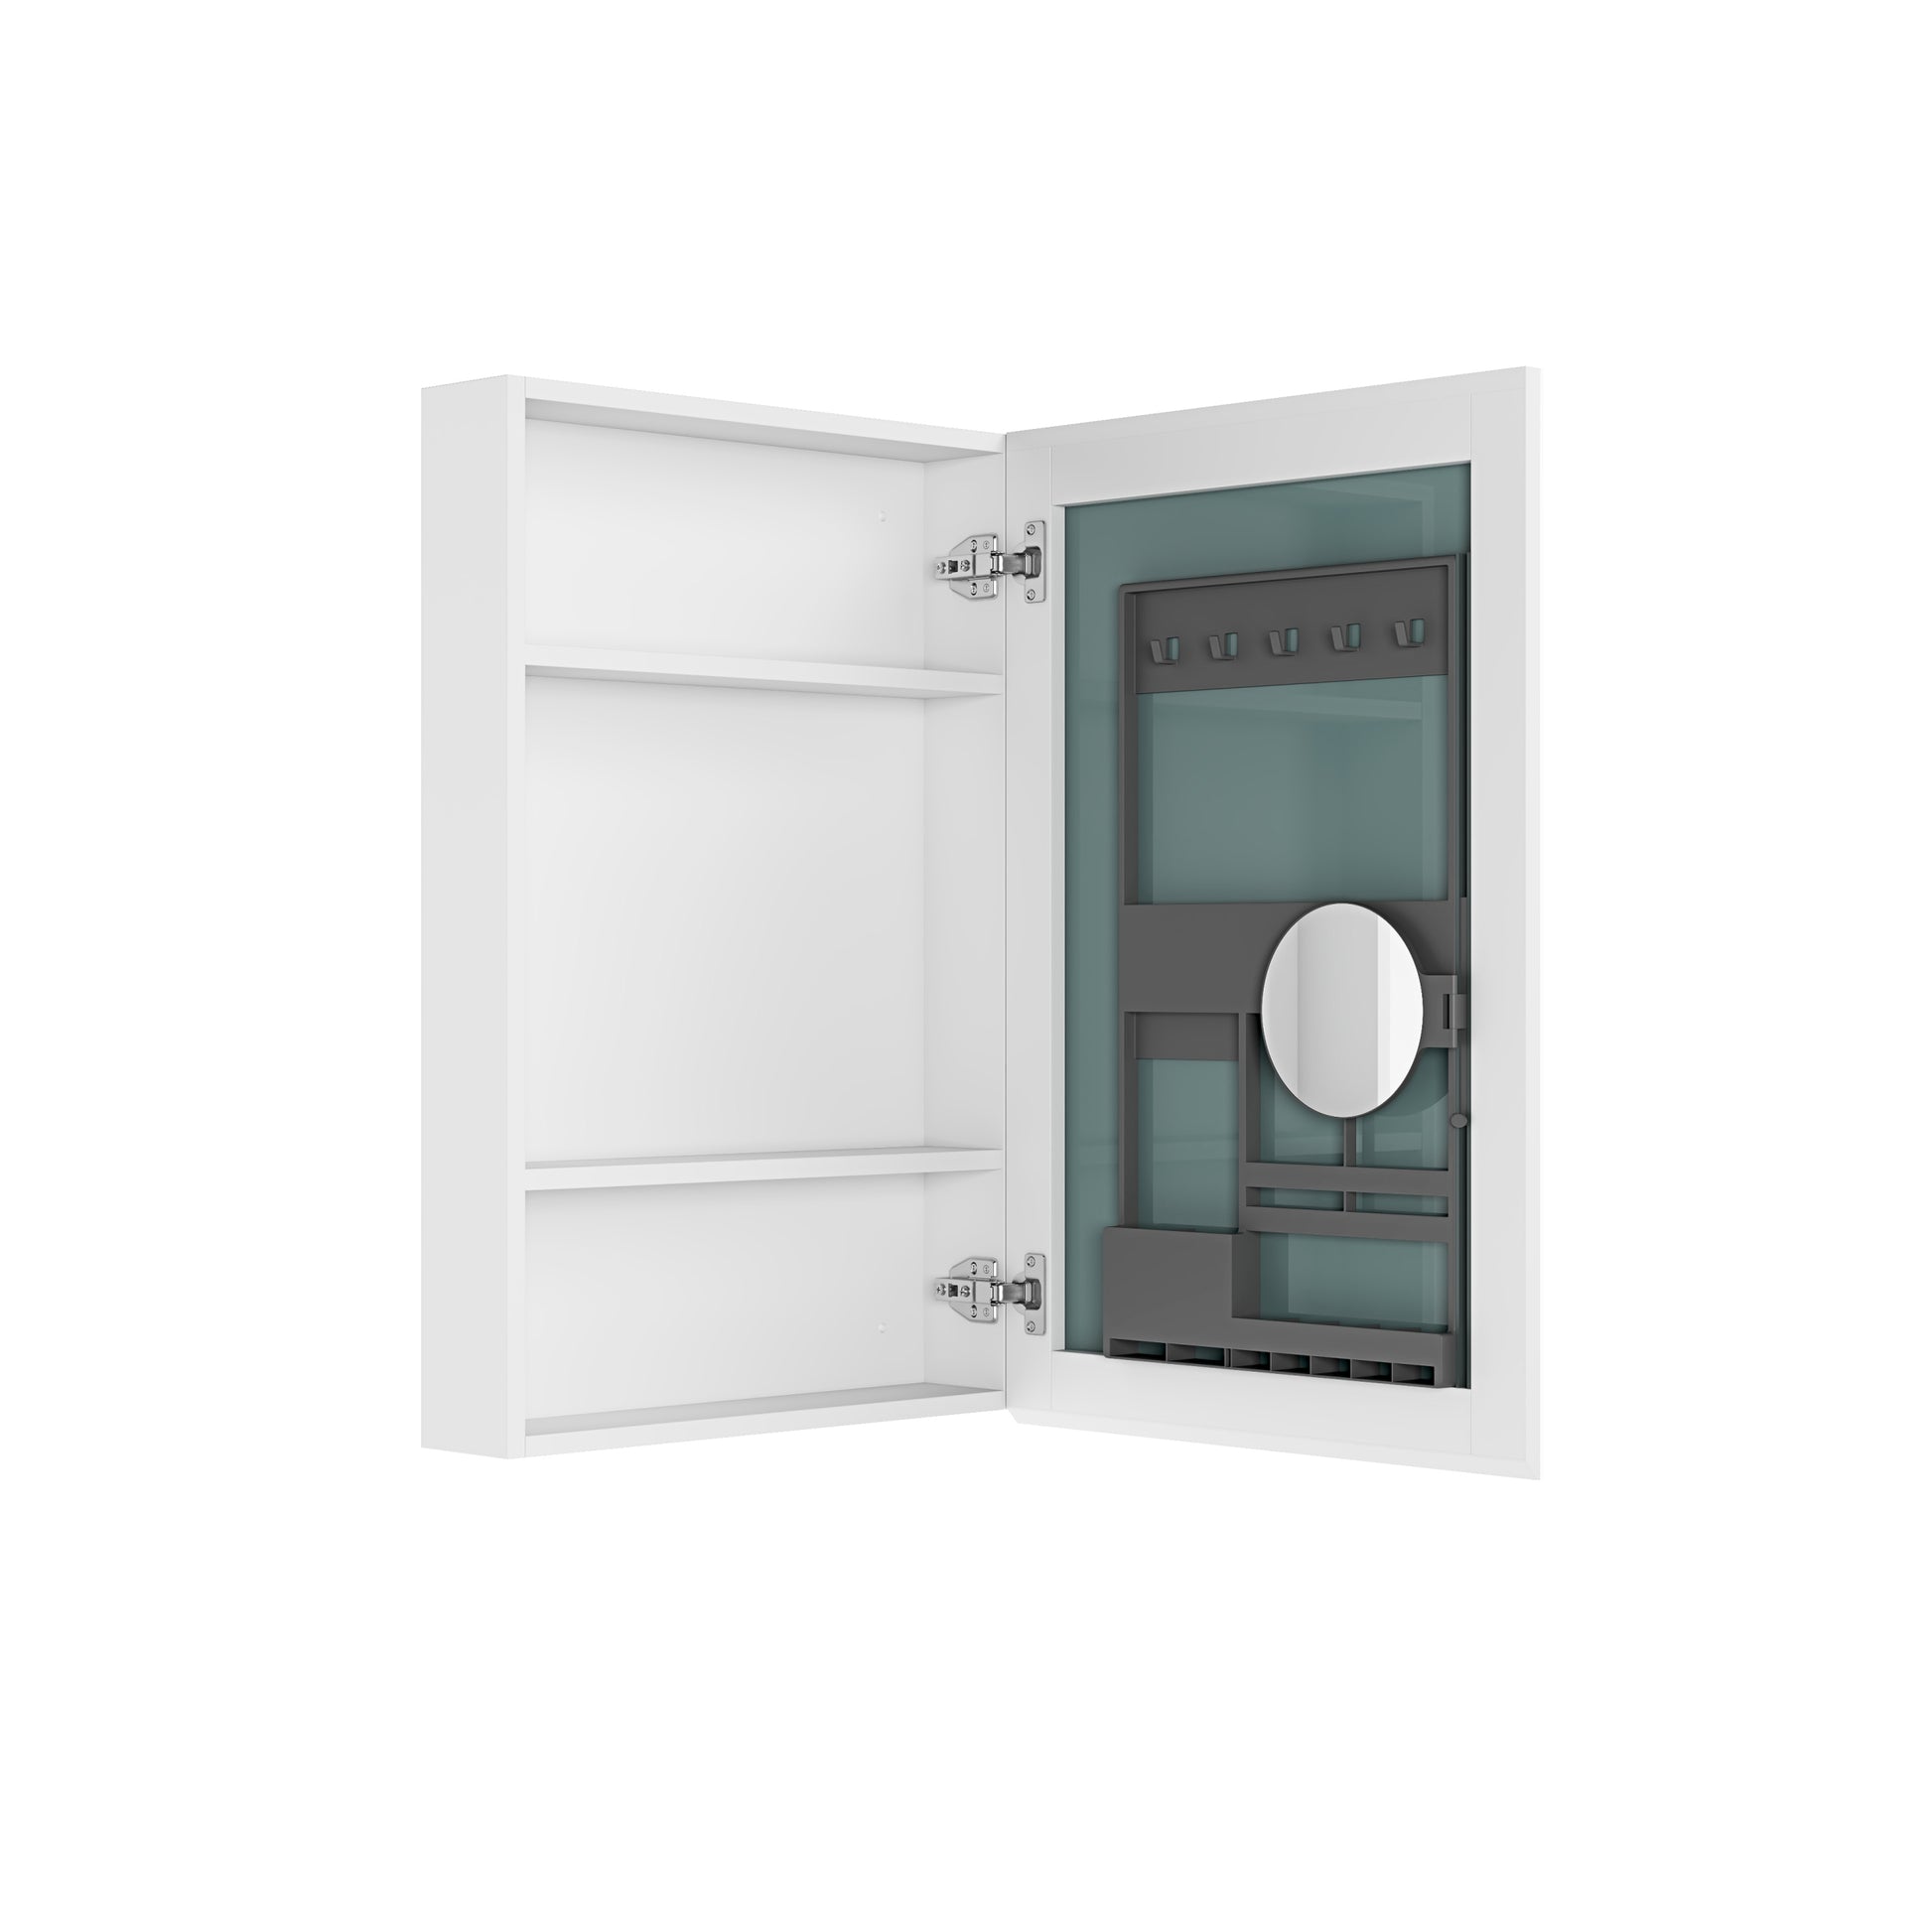 20" W x 30" H Single Door Bathroom Medicine Cabinet white-engineered wood